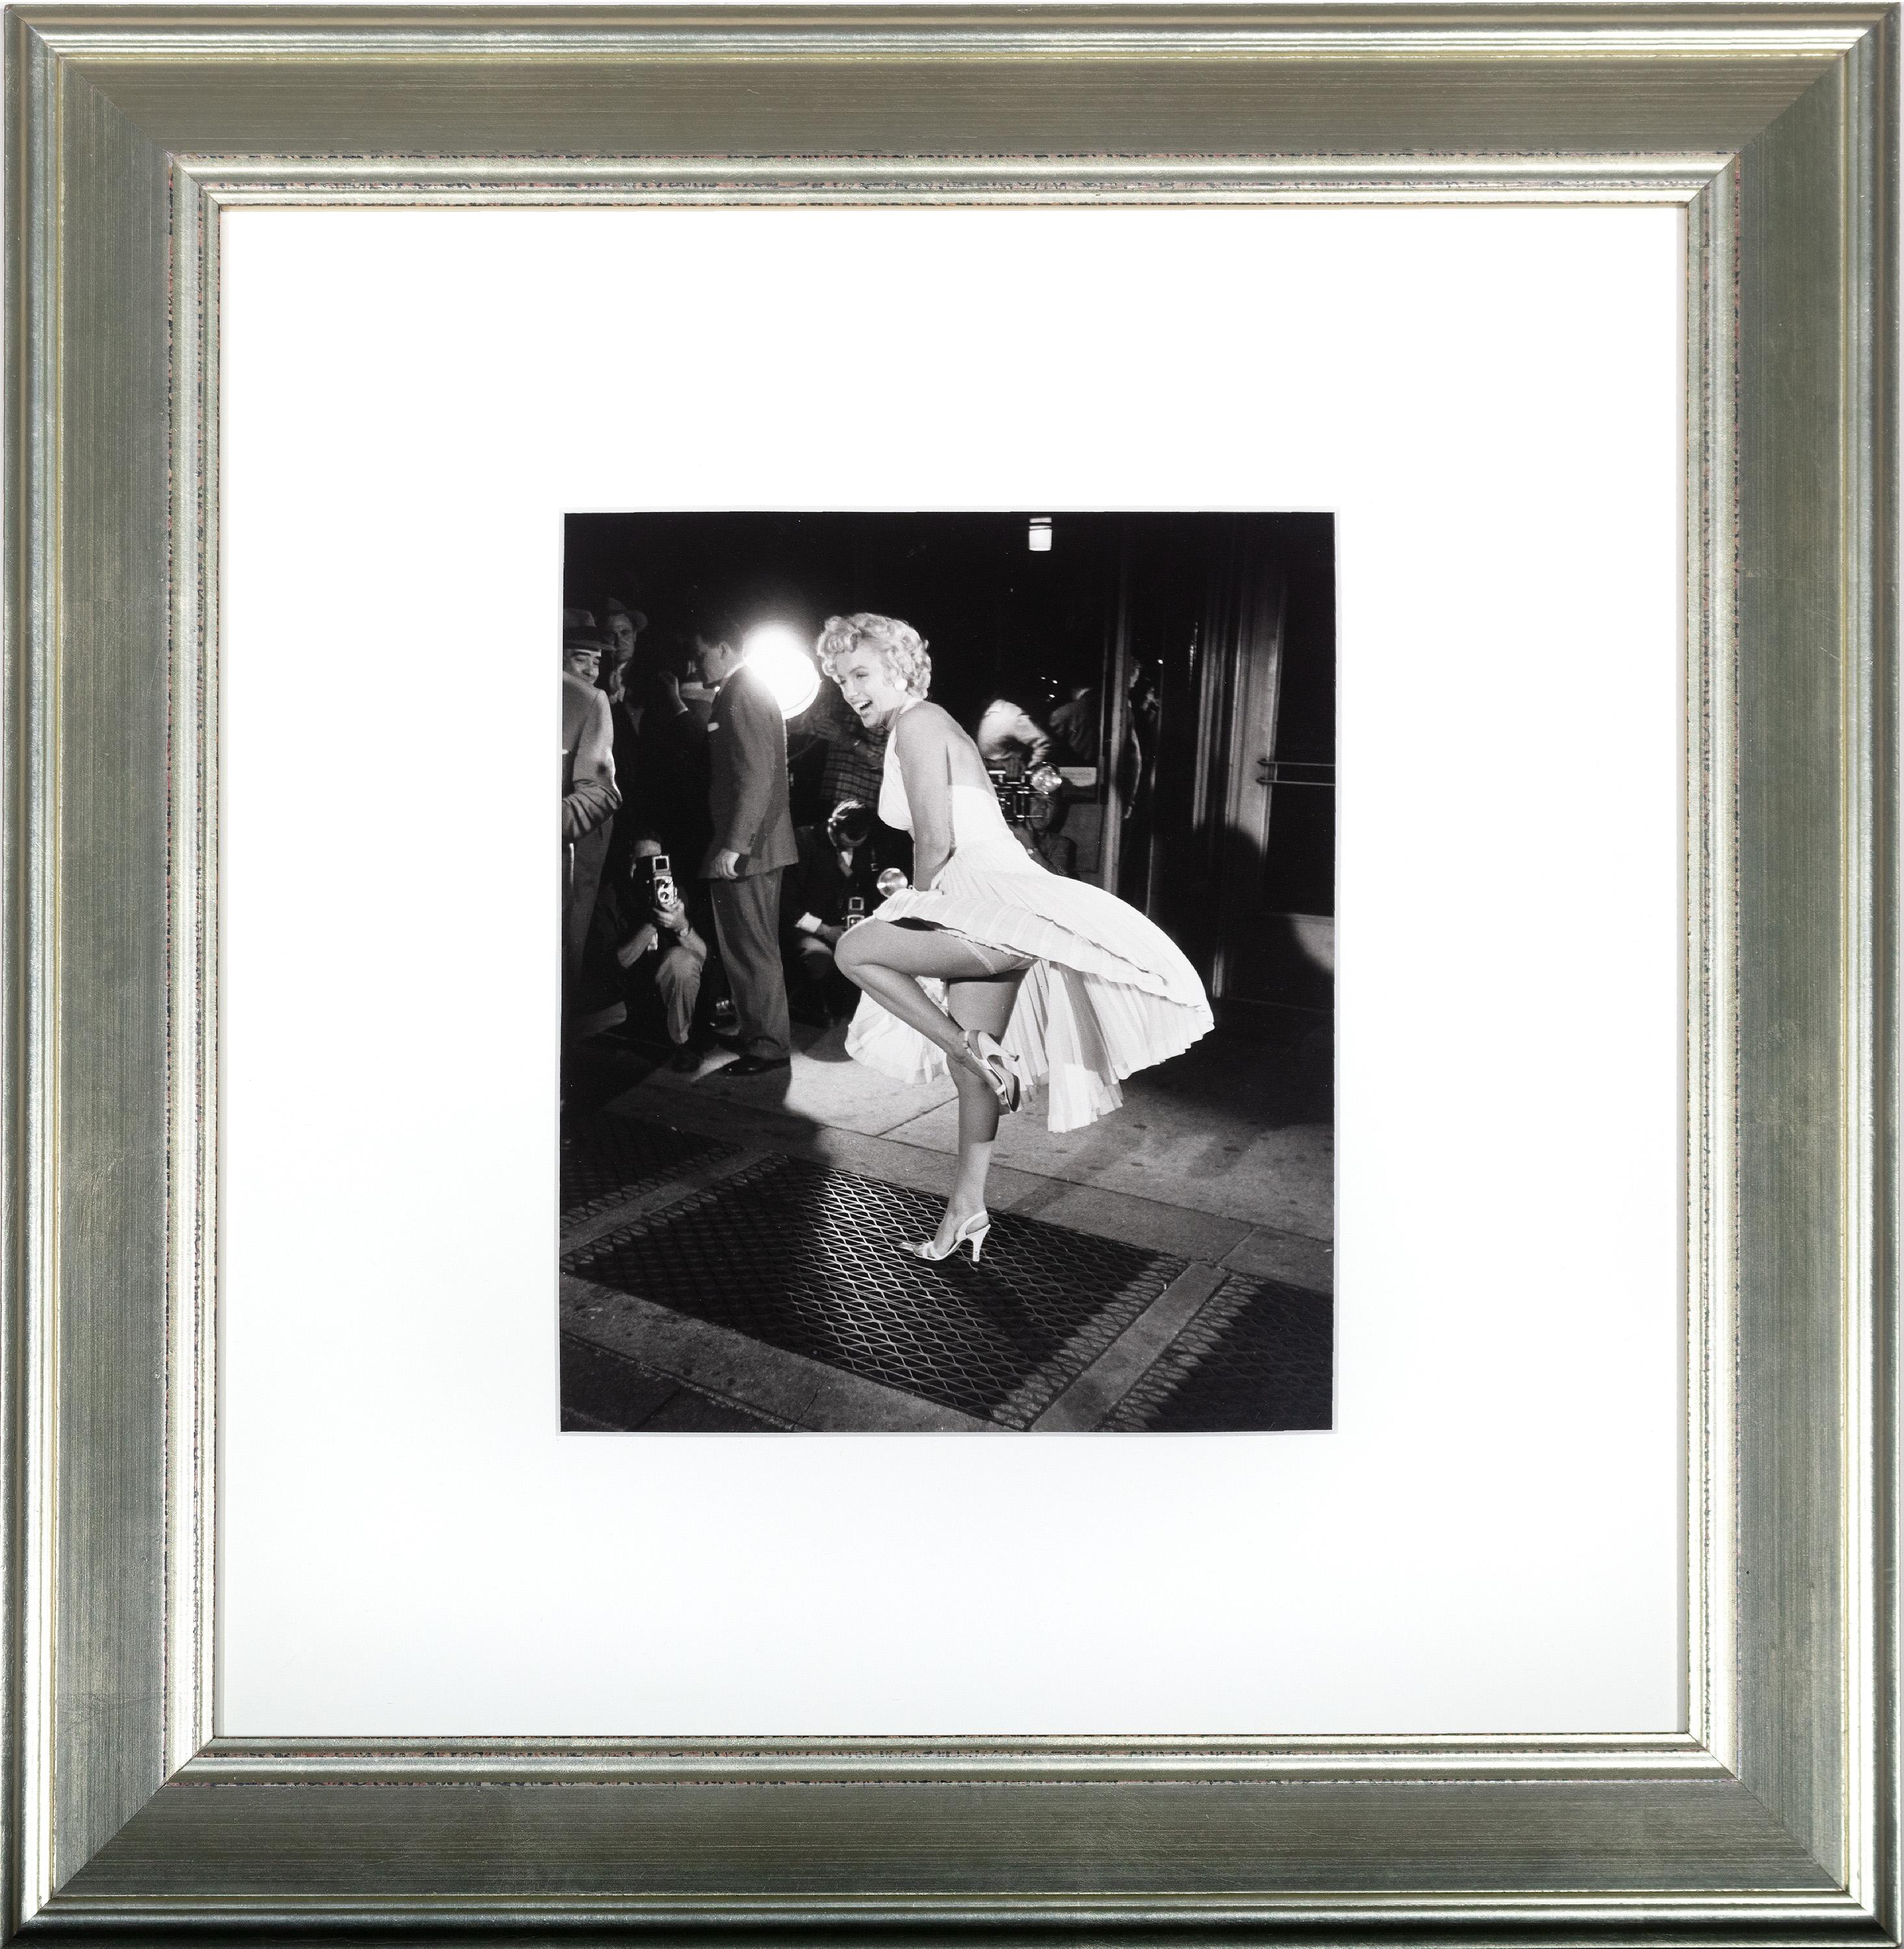 George Zimbel Figurative Photograph - Marylin Monroe Black and White Photograph Female Iconic Pop Americana Signed